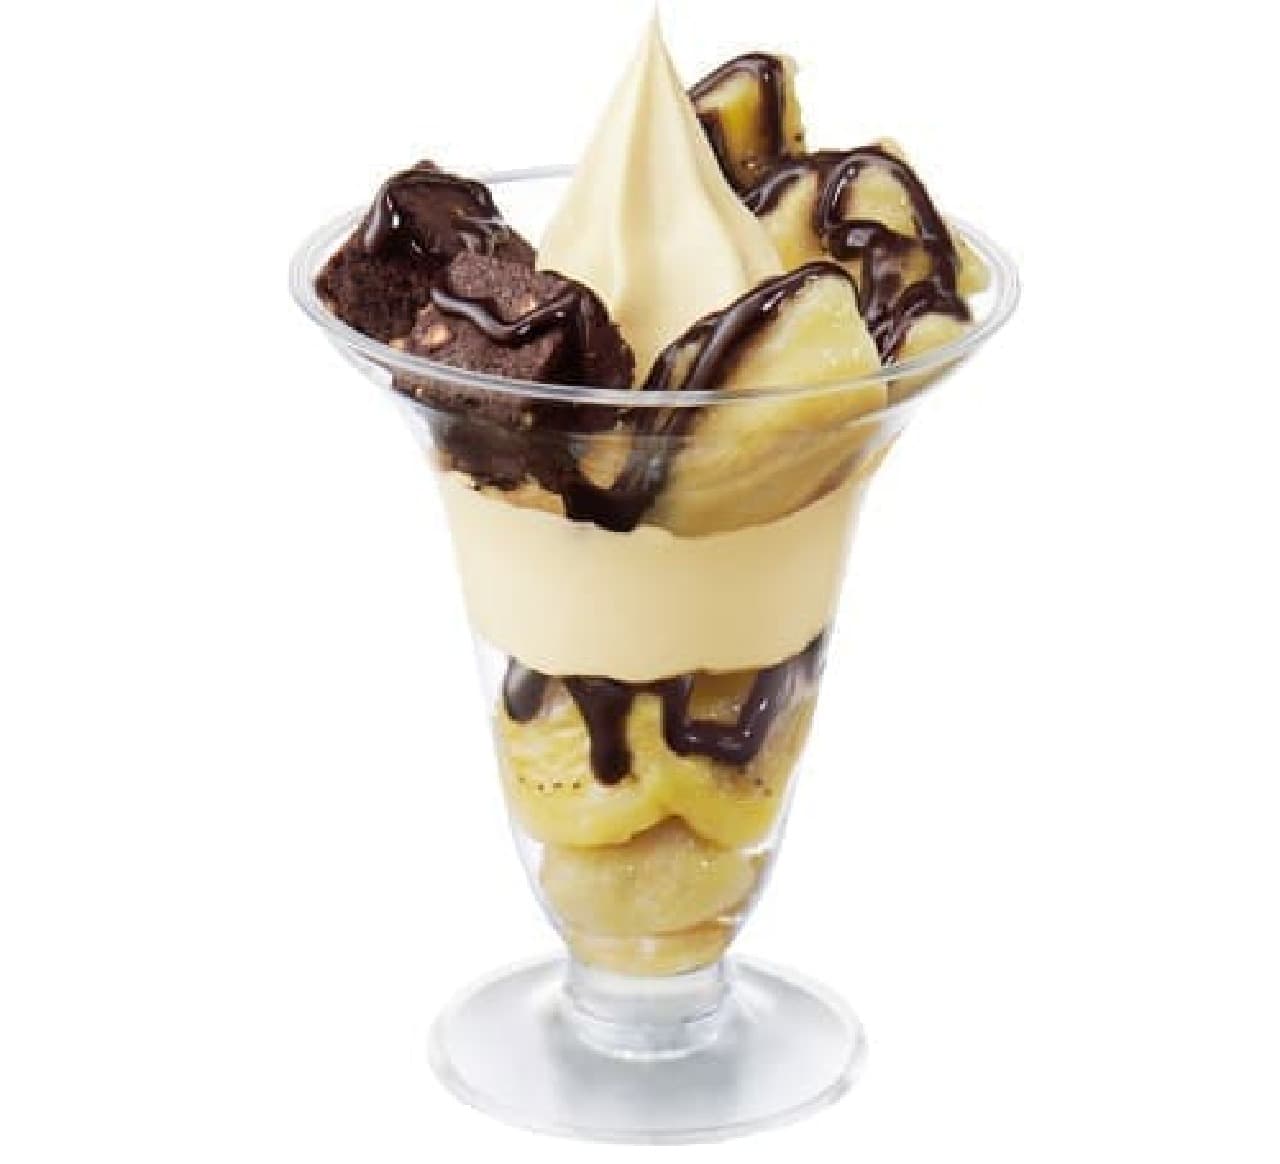 Ministop "Belgian Chocolate Banana Parfait"